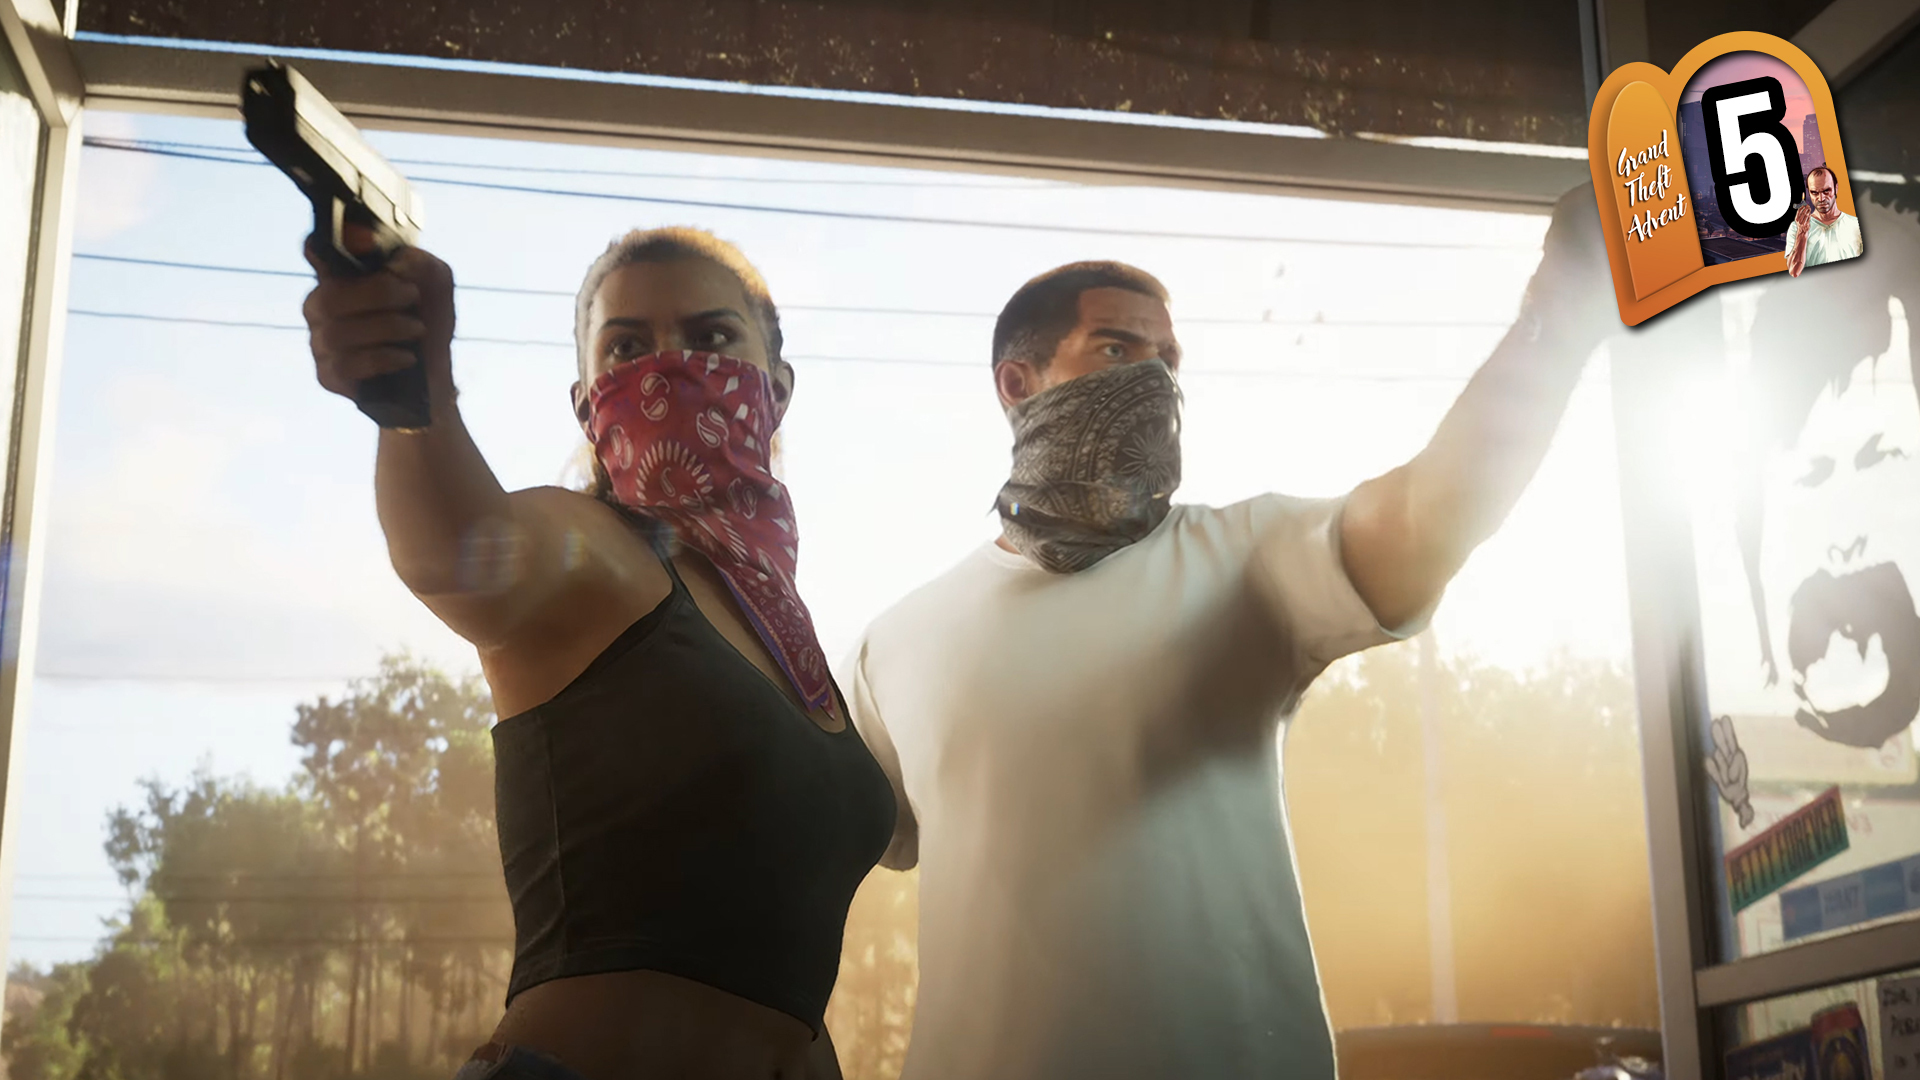 Unprecedented Buzz for GTA 6 Trailer Release - Rockstar Sets New